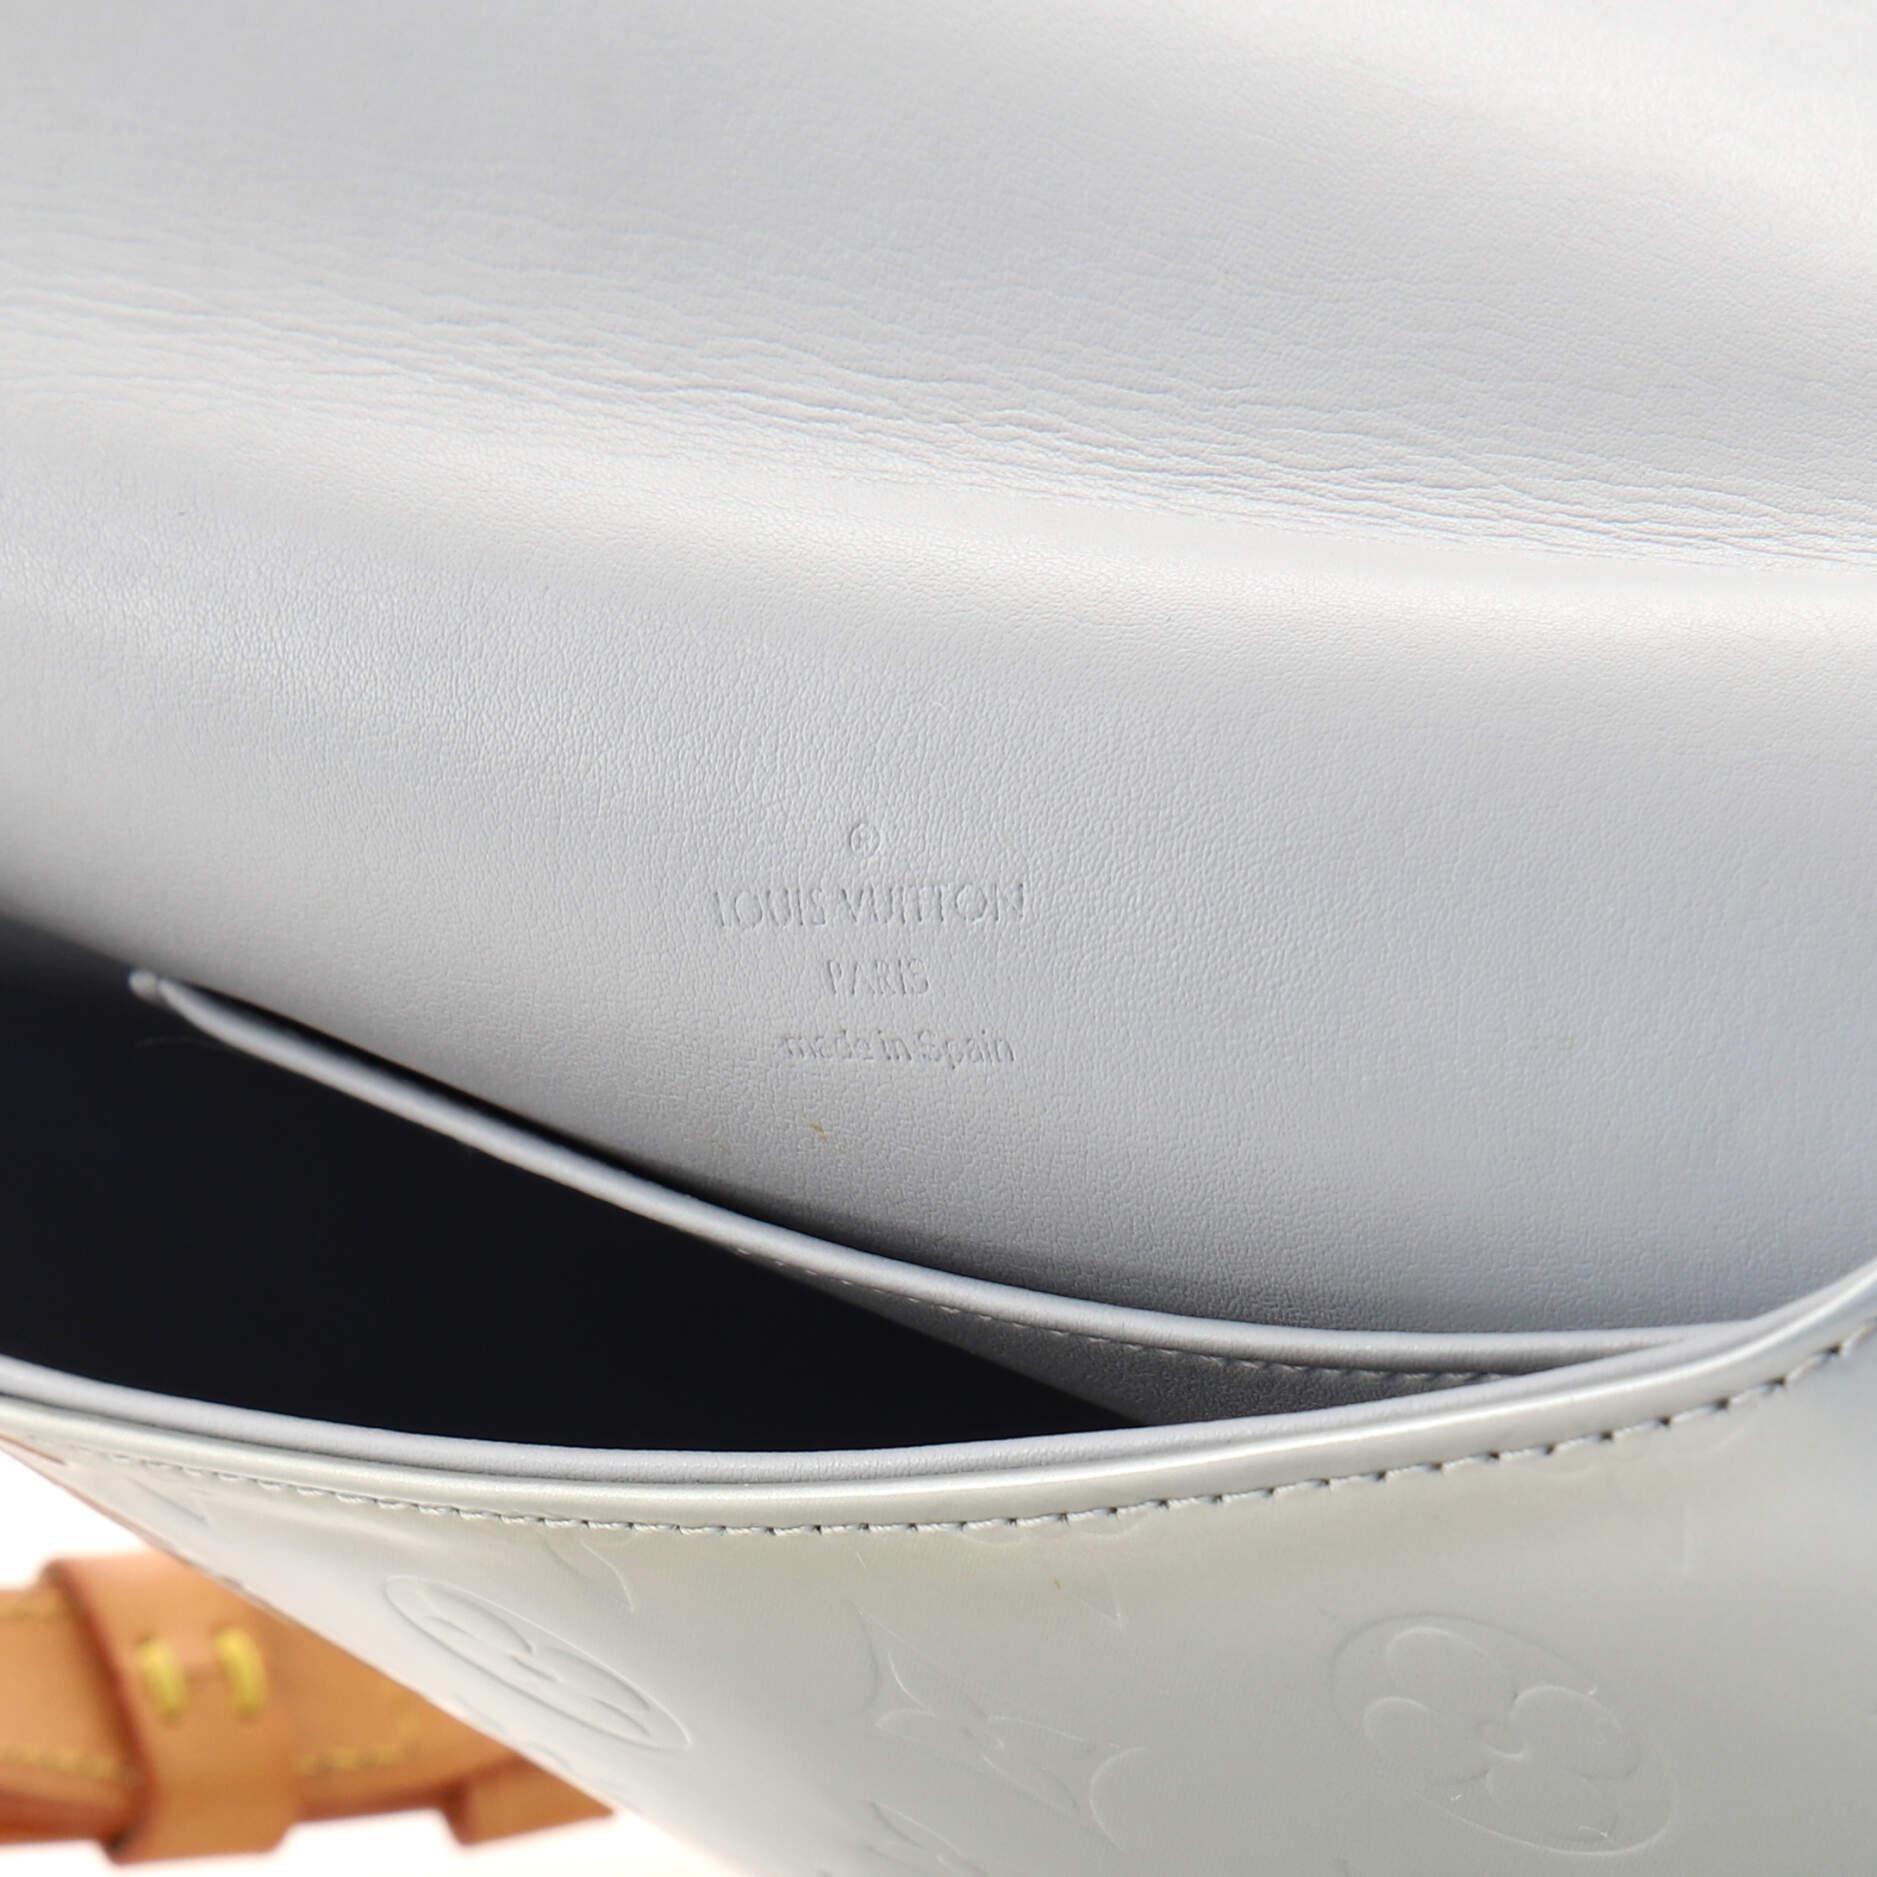 Louis Vuitton Thompson Street Handbag Monogram Vernis 2